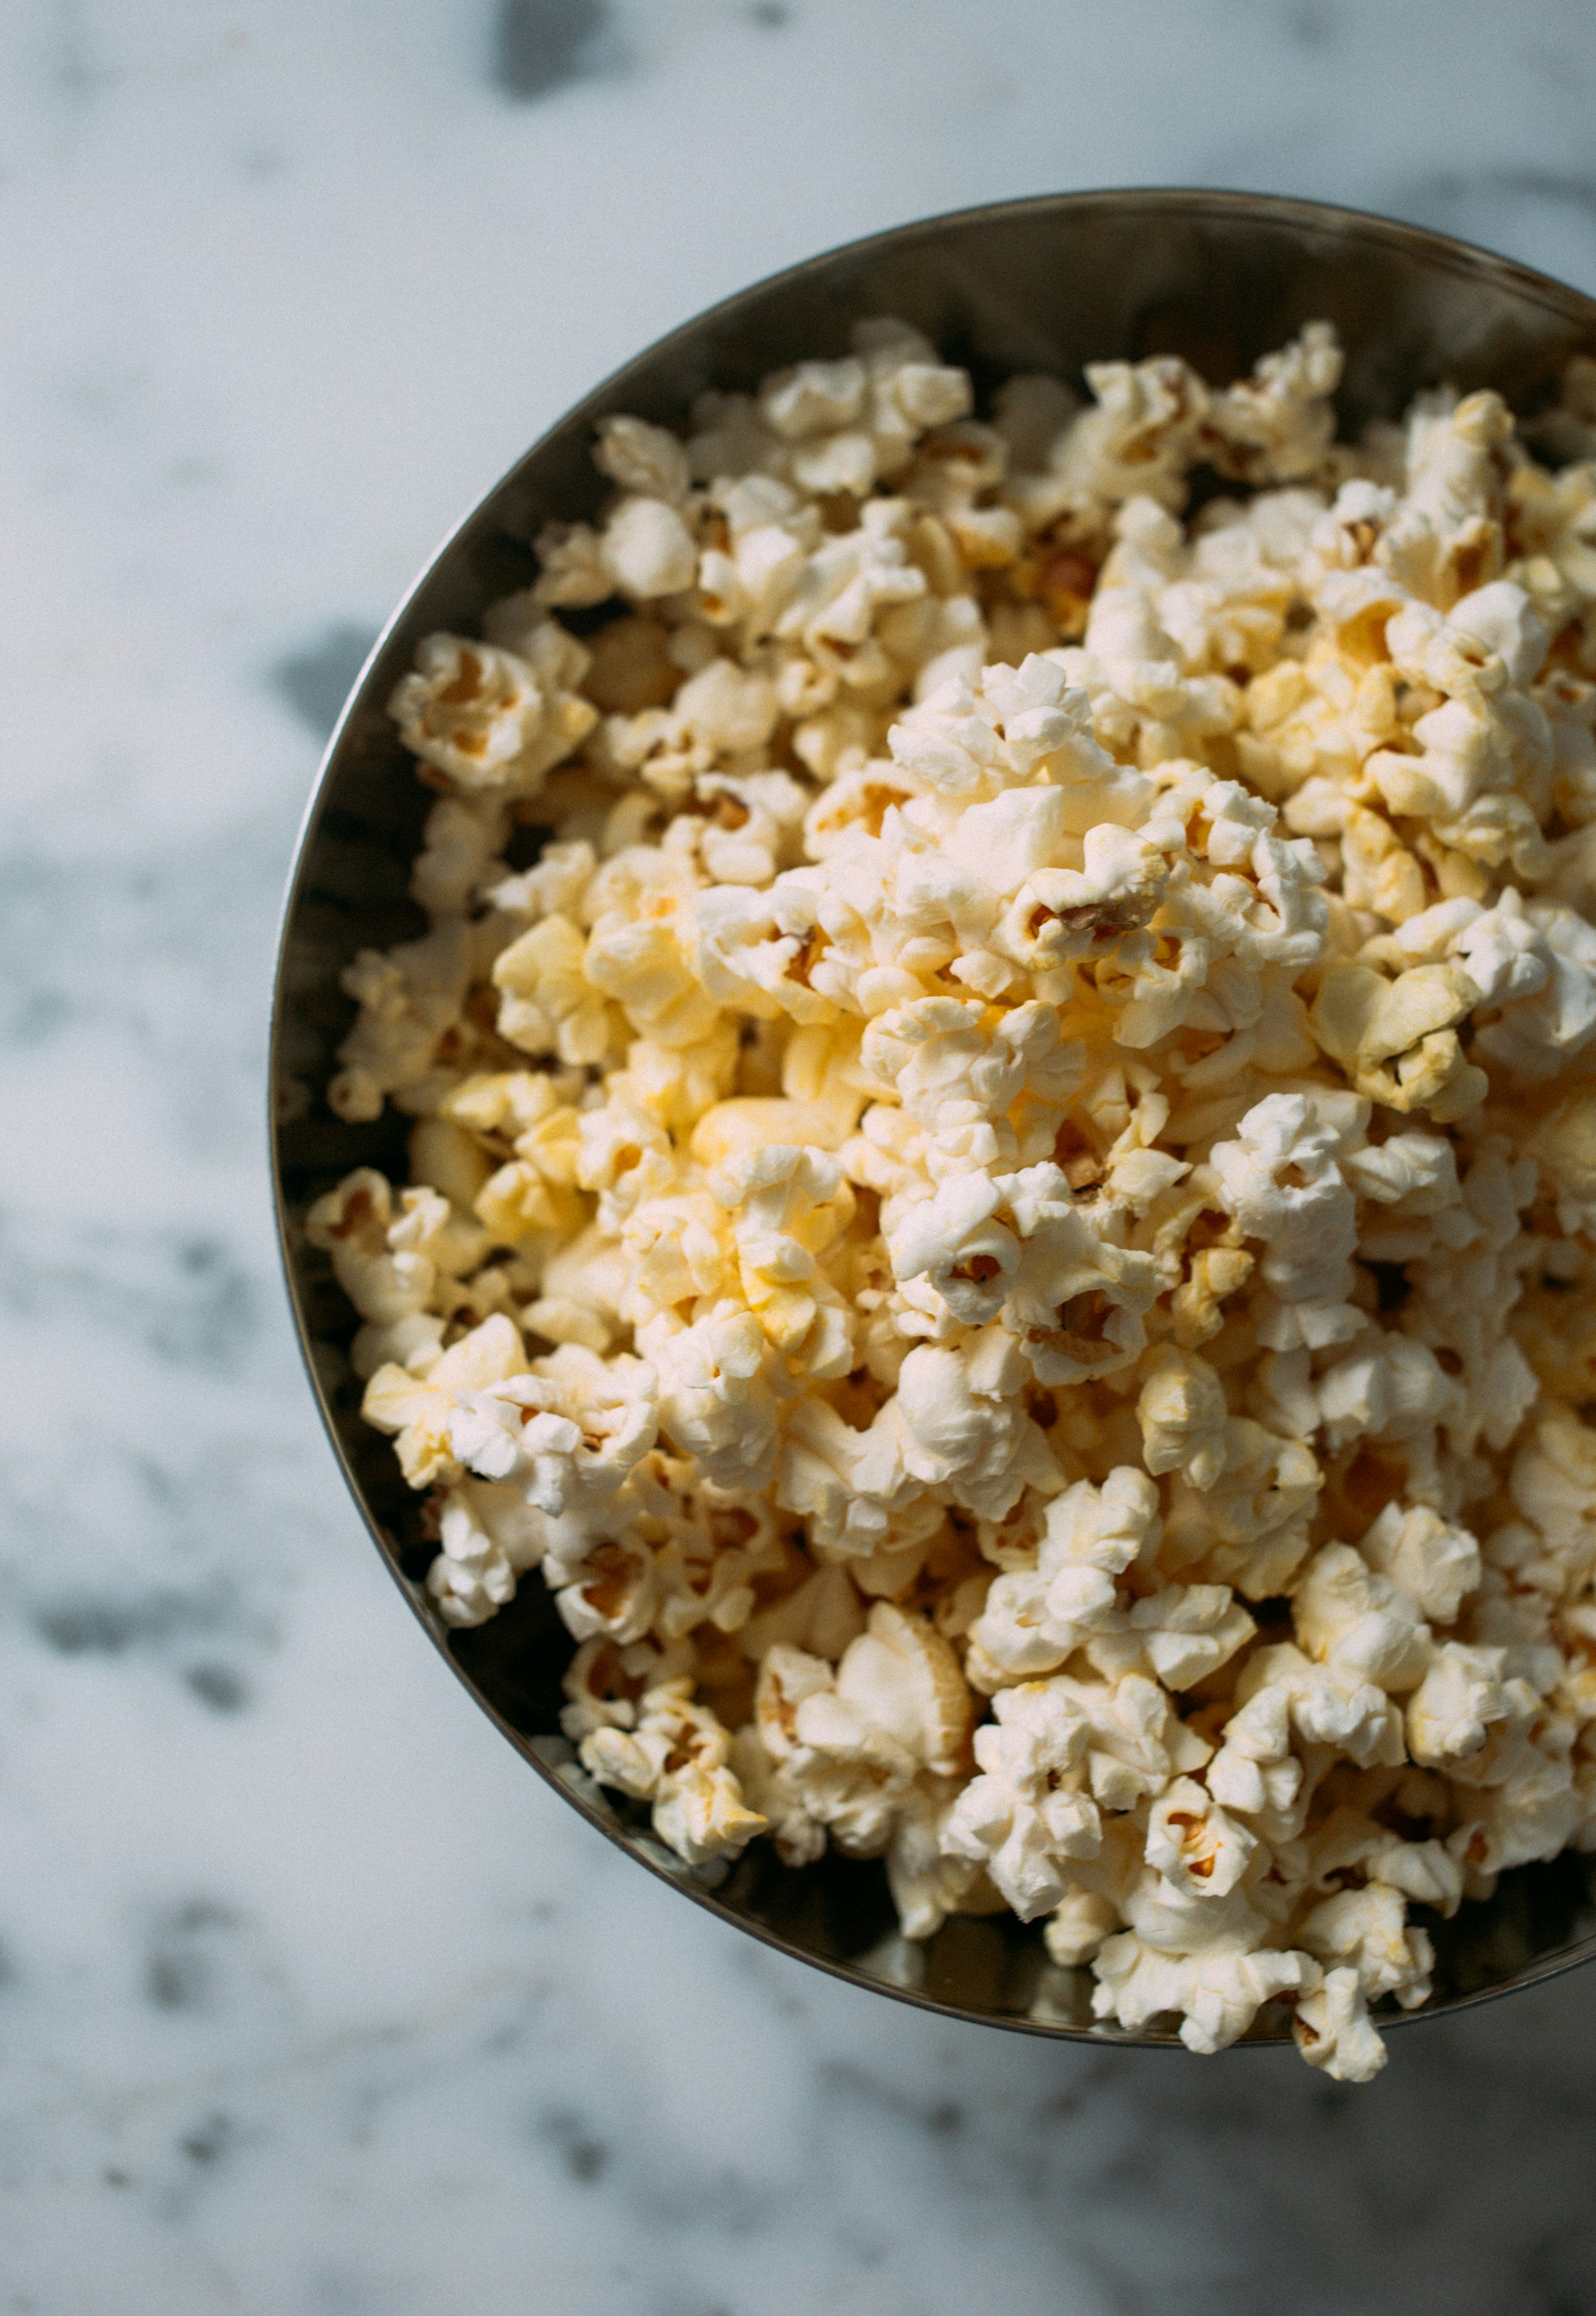 A bowl of popcorn | Source: Unsplash